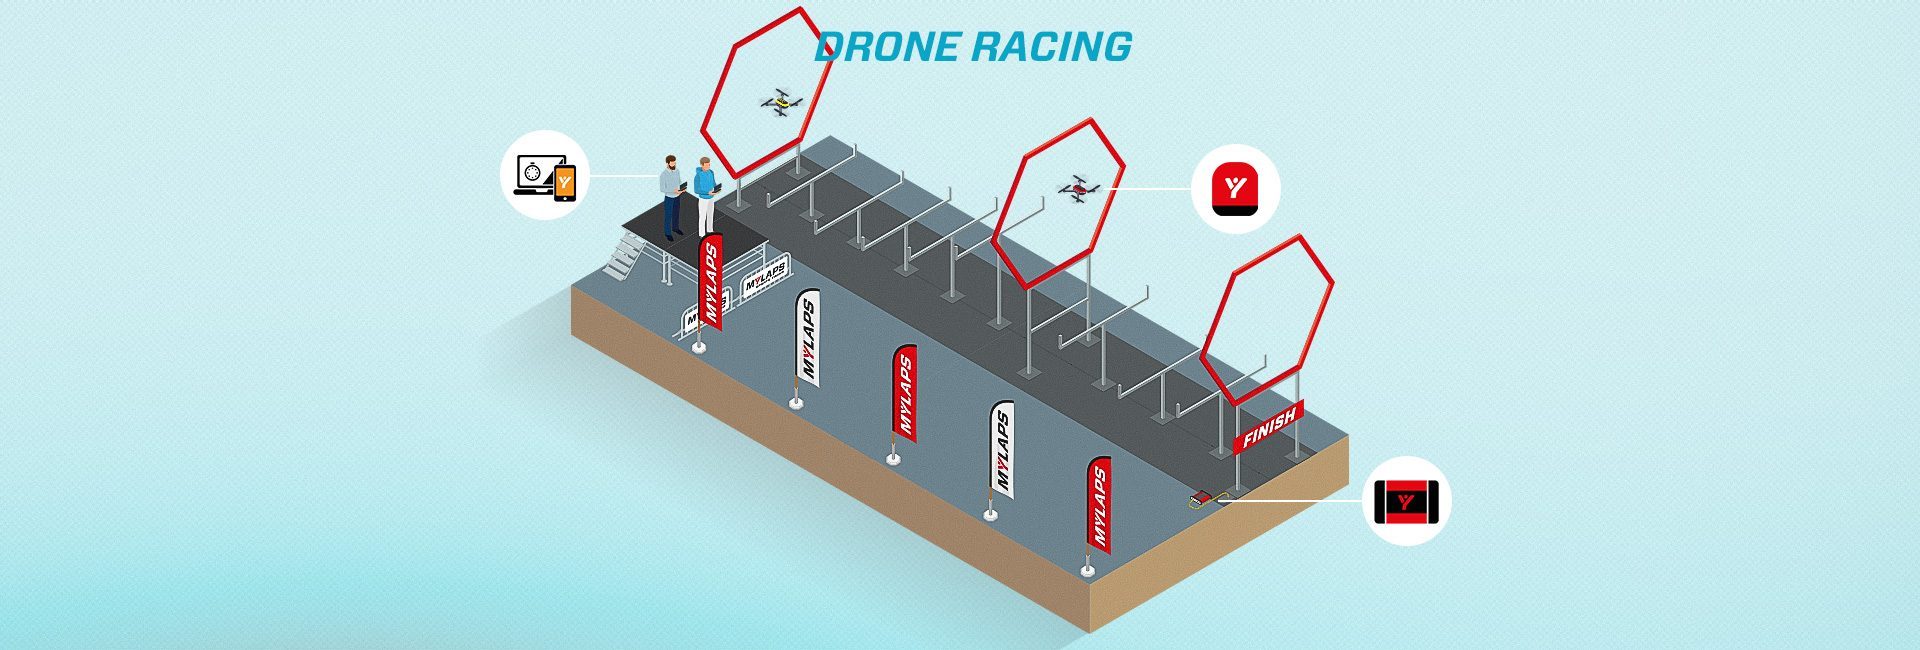 RC & Drone Racing 3